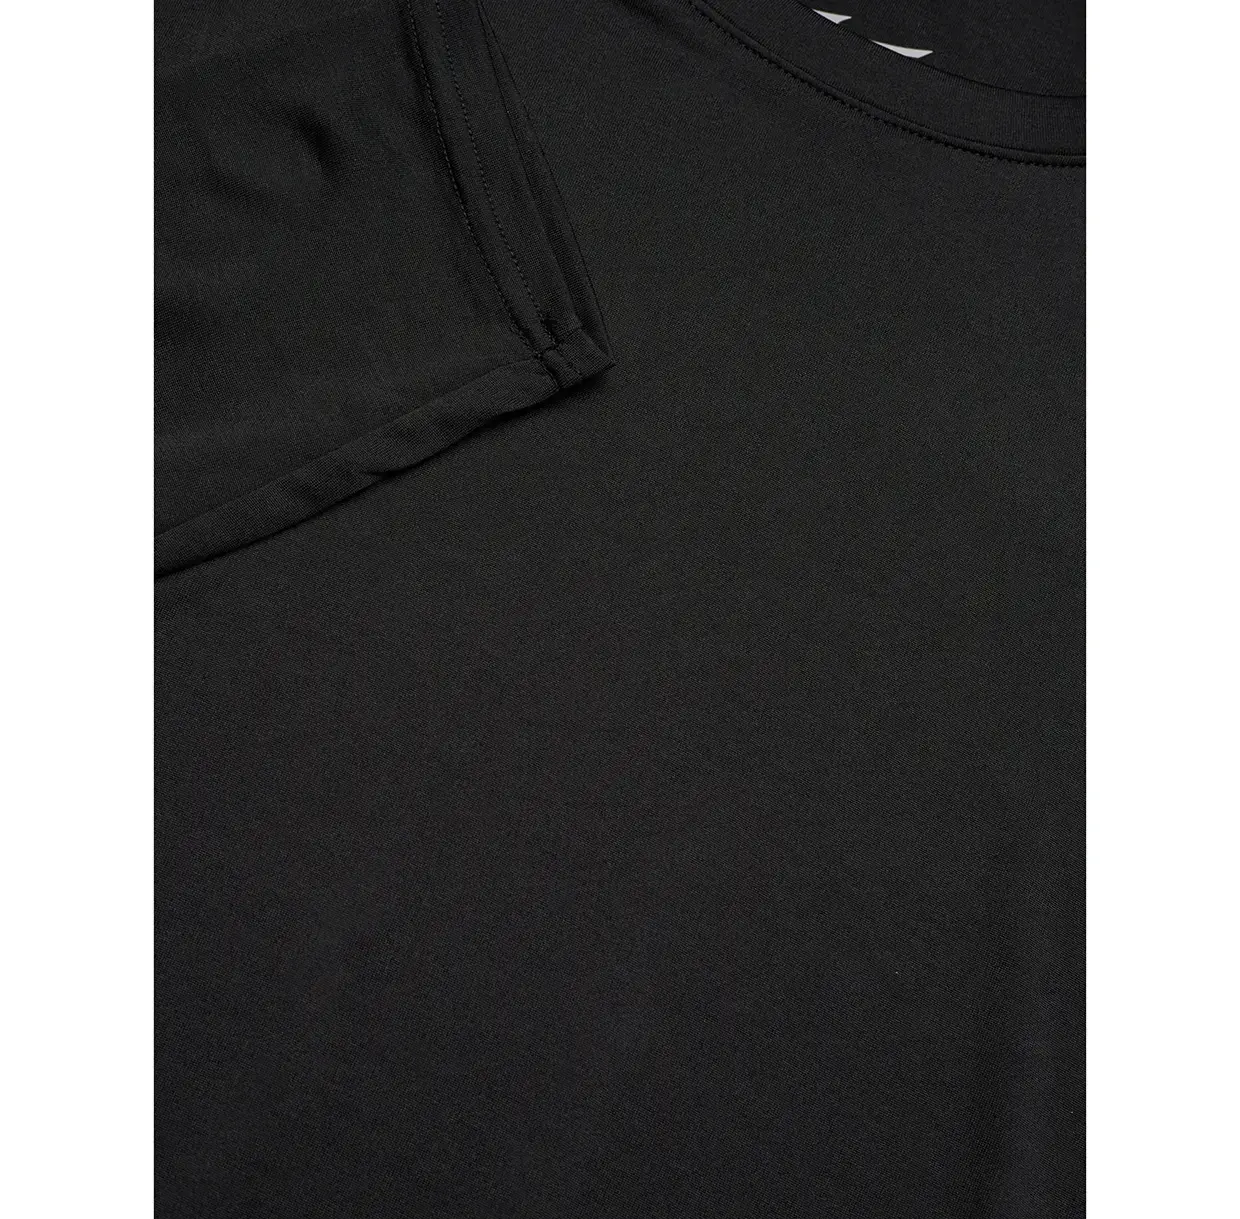 Mizuno Impulse Core Hardloopshirt Lange Mouwen Zwart Heren